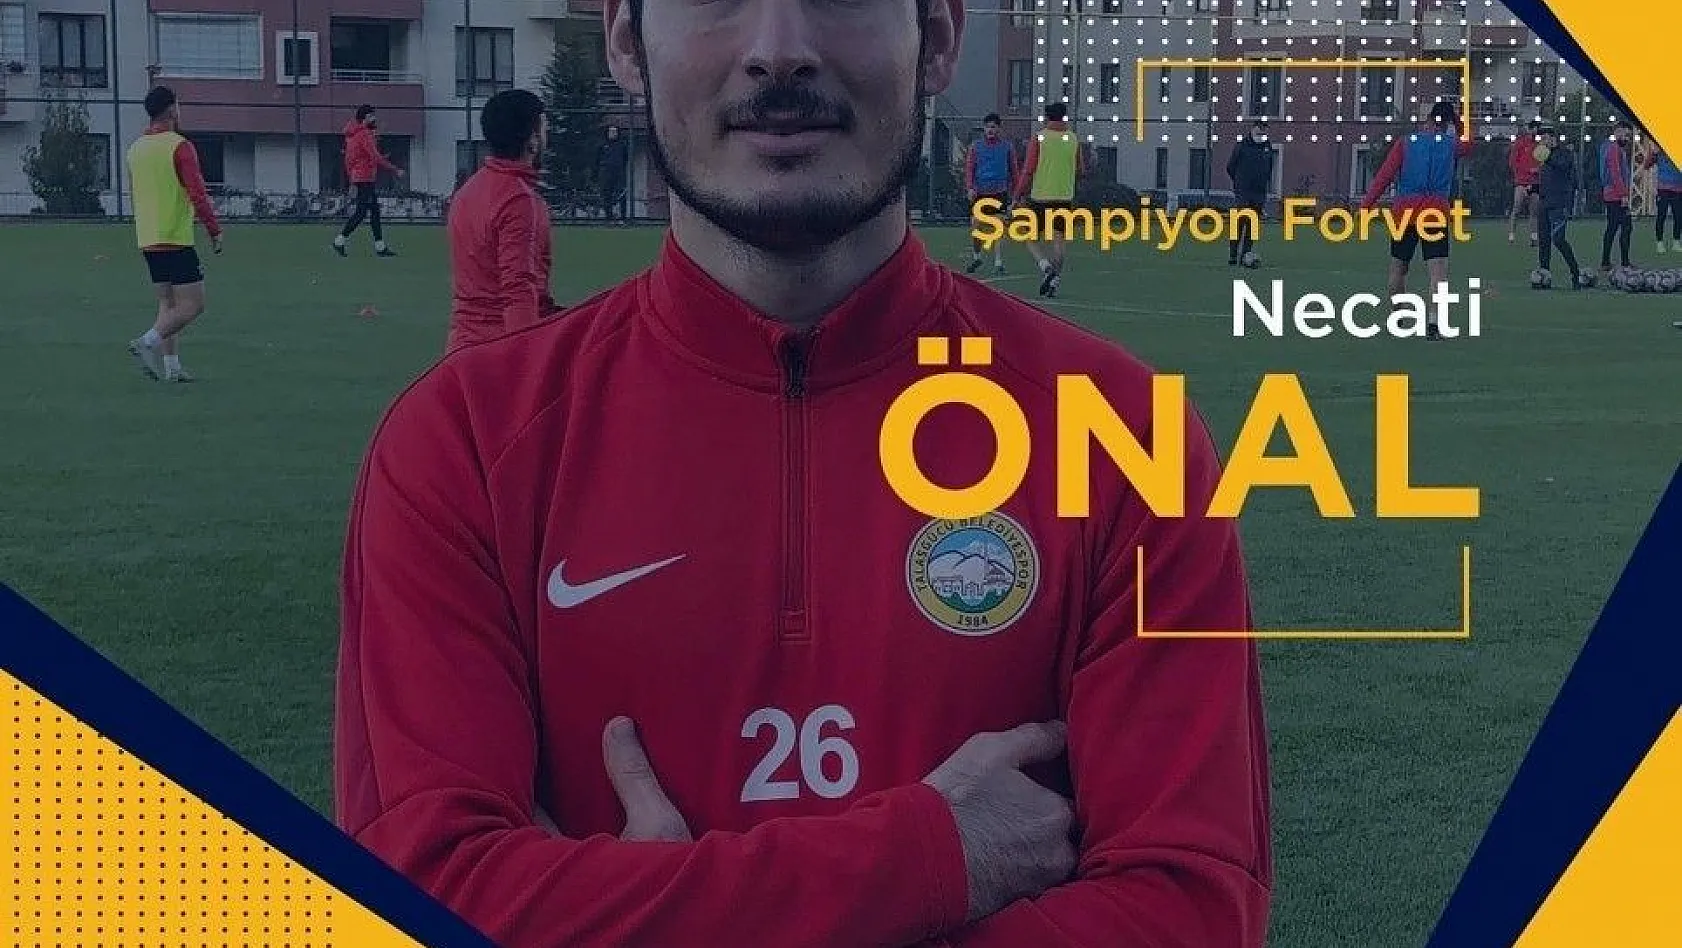 Talasgücü Belediyespor'a yeni golcü